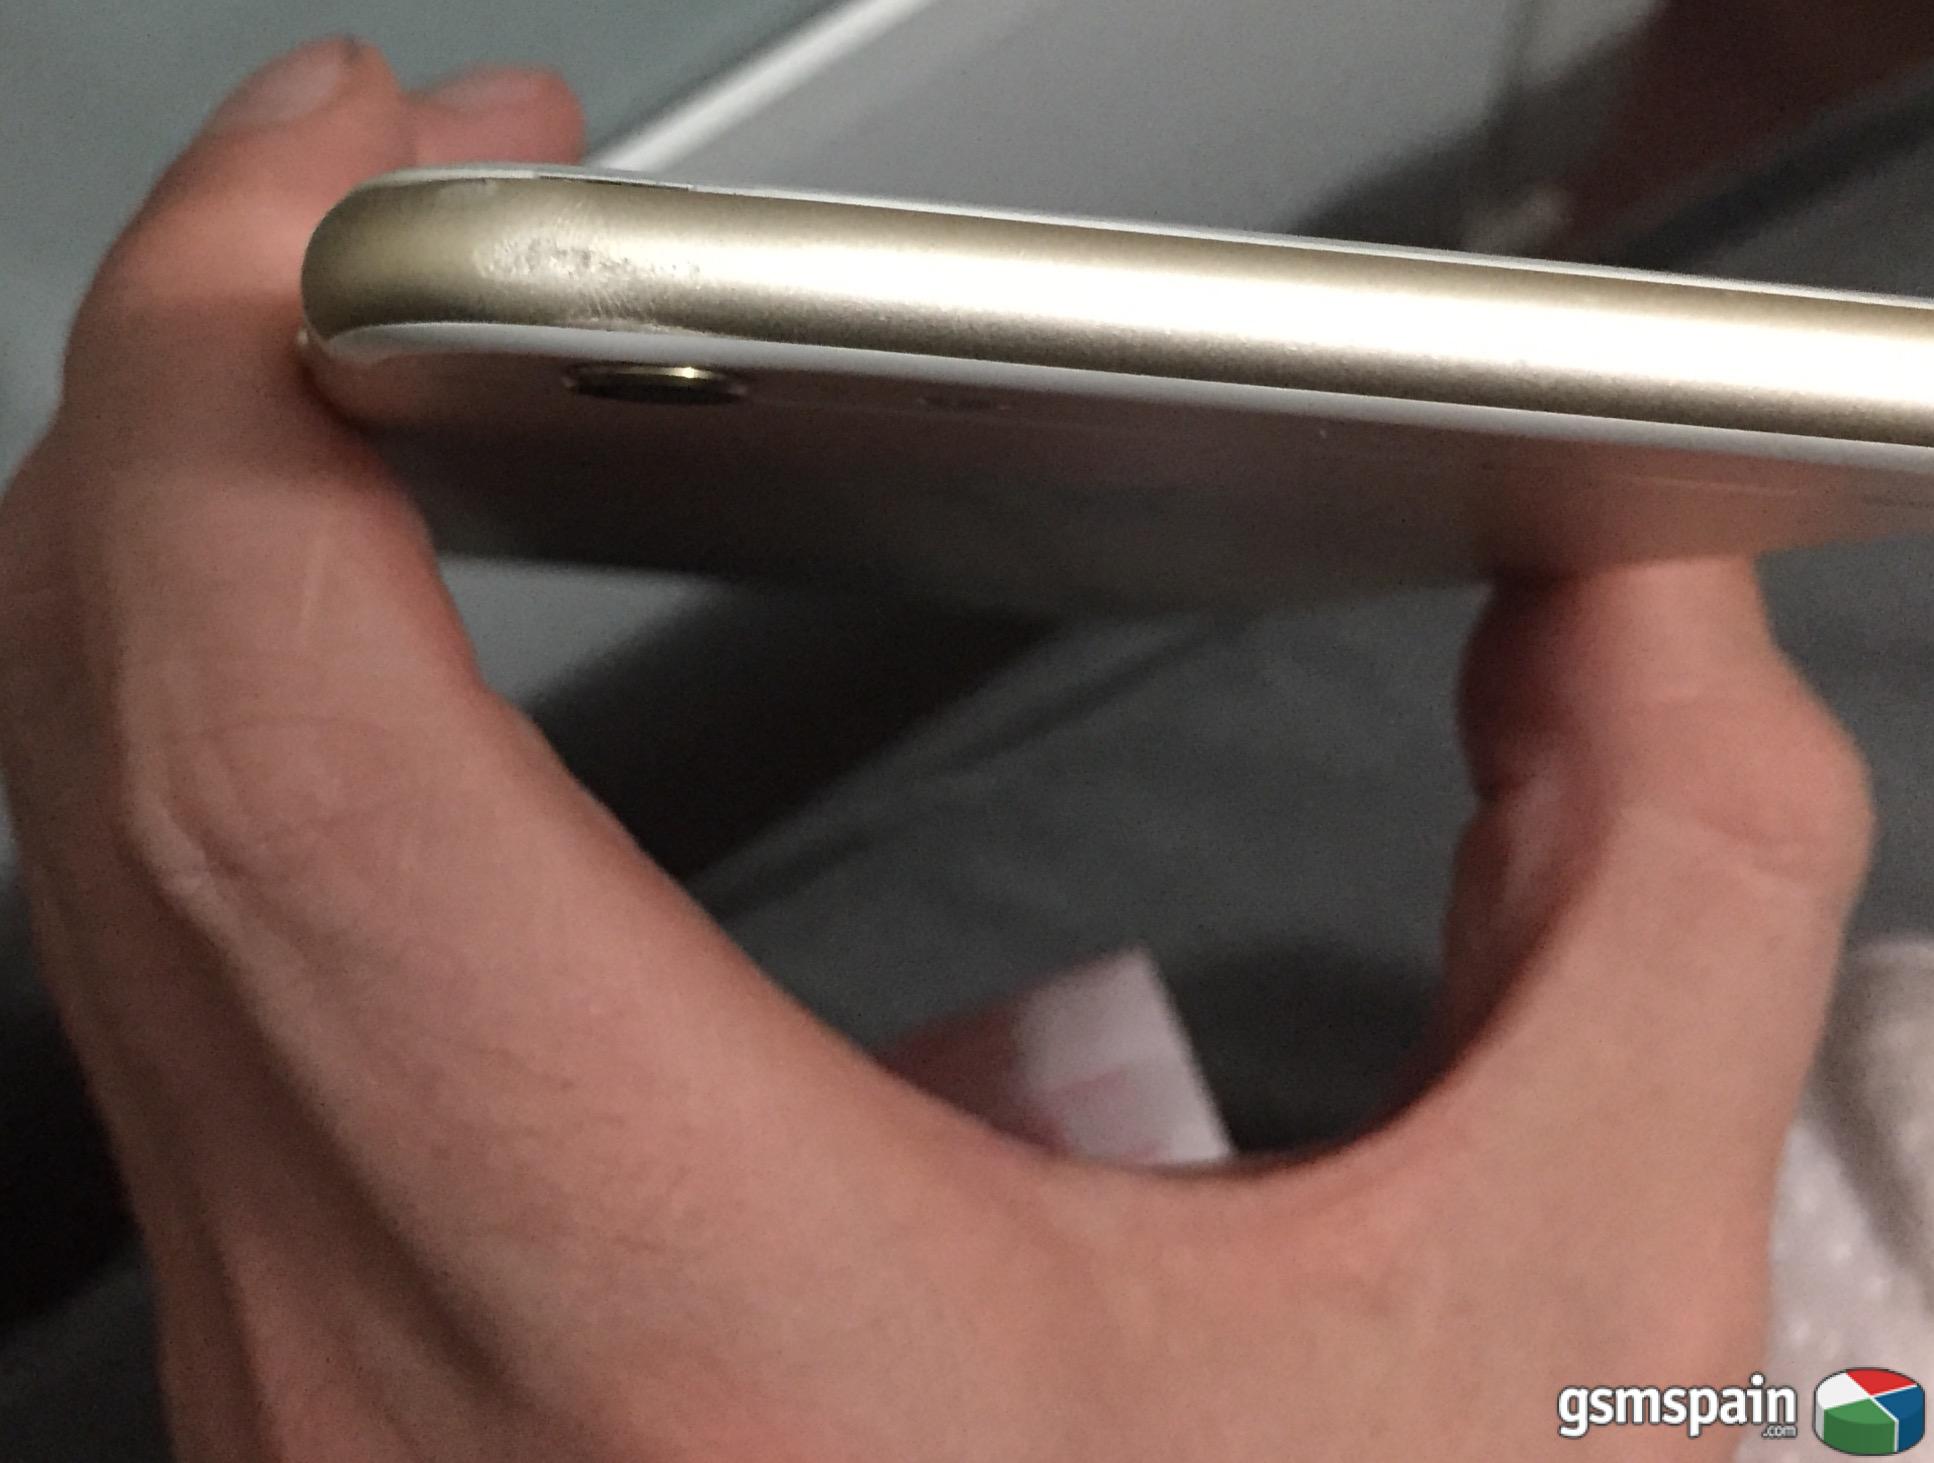 [VENDO] iPhone 6 Plus 16Gb gold con Apple Care